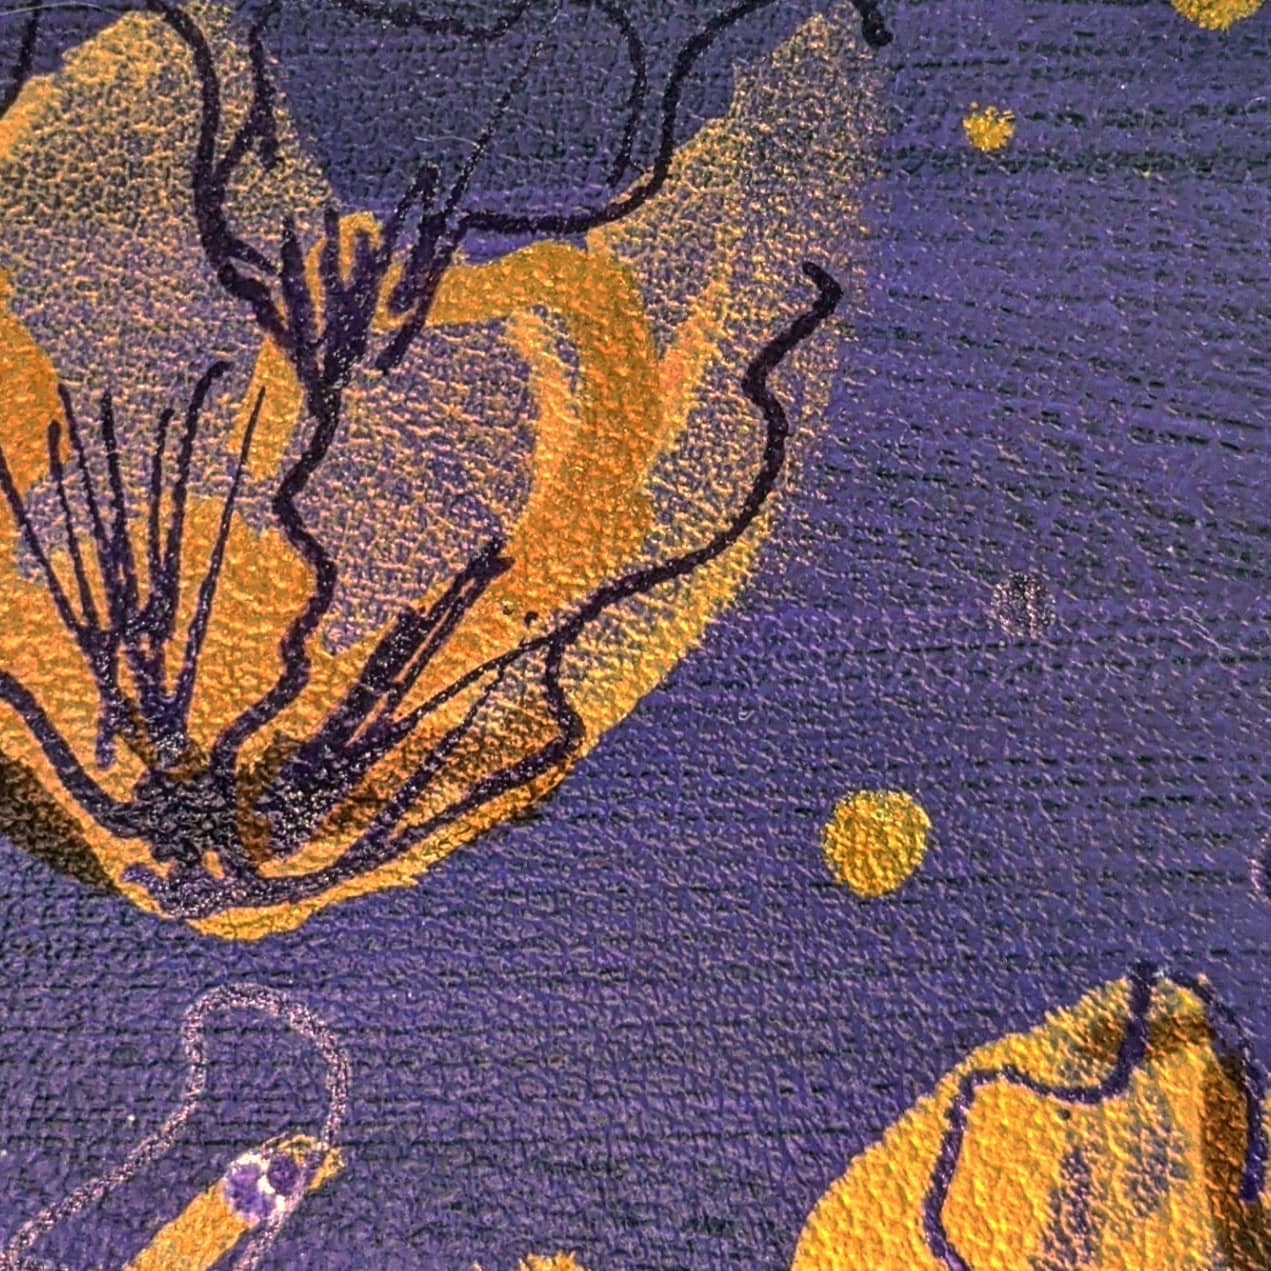 Ombre Purple Flowers- Hand Painted Bag – Jen Stone Design